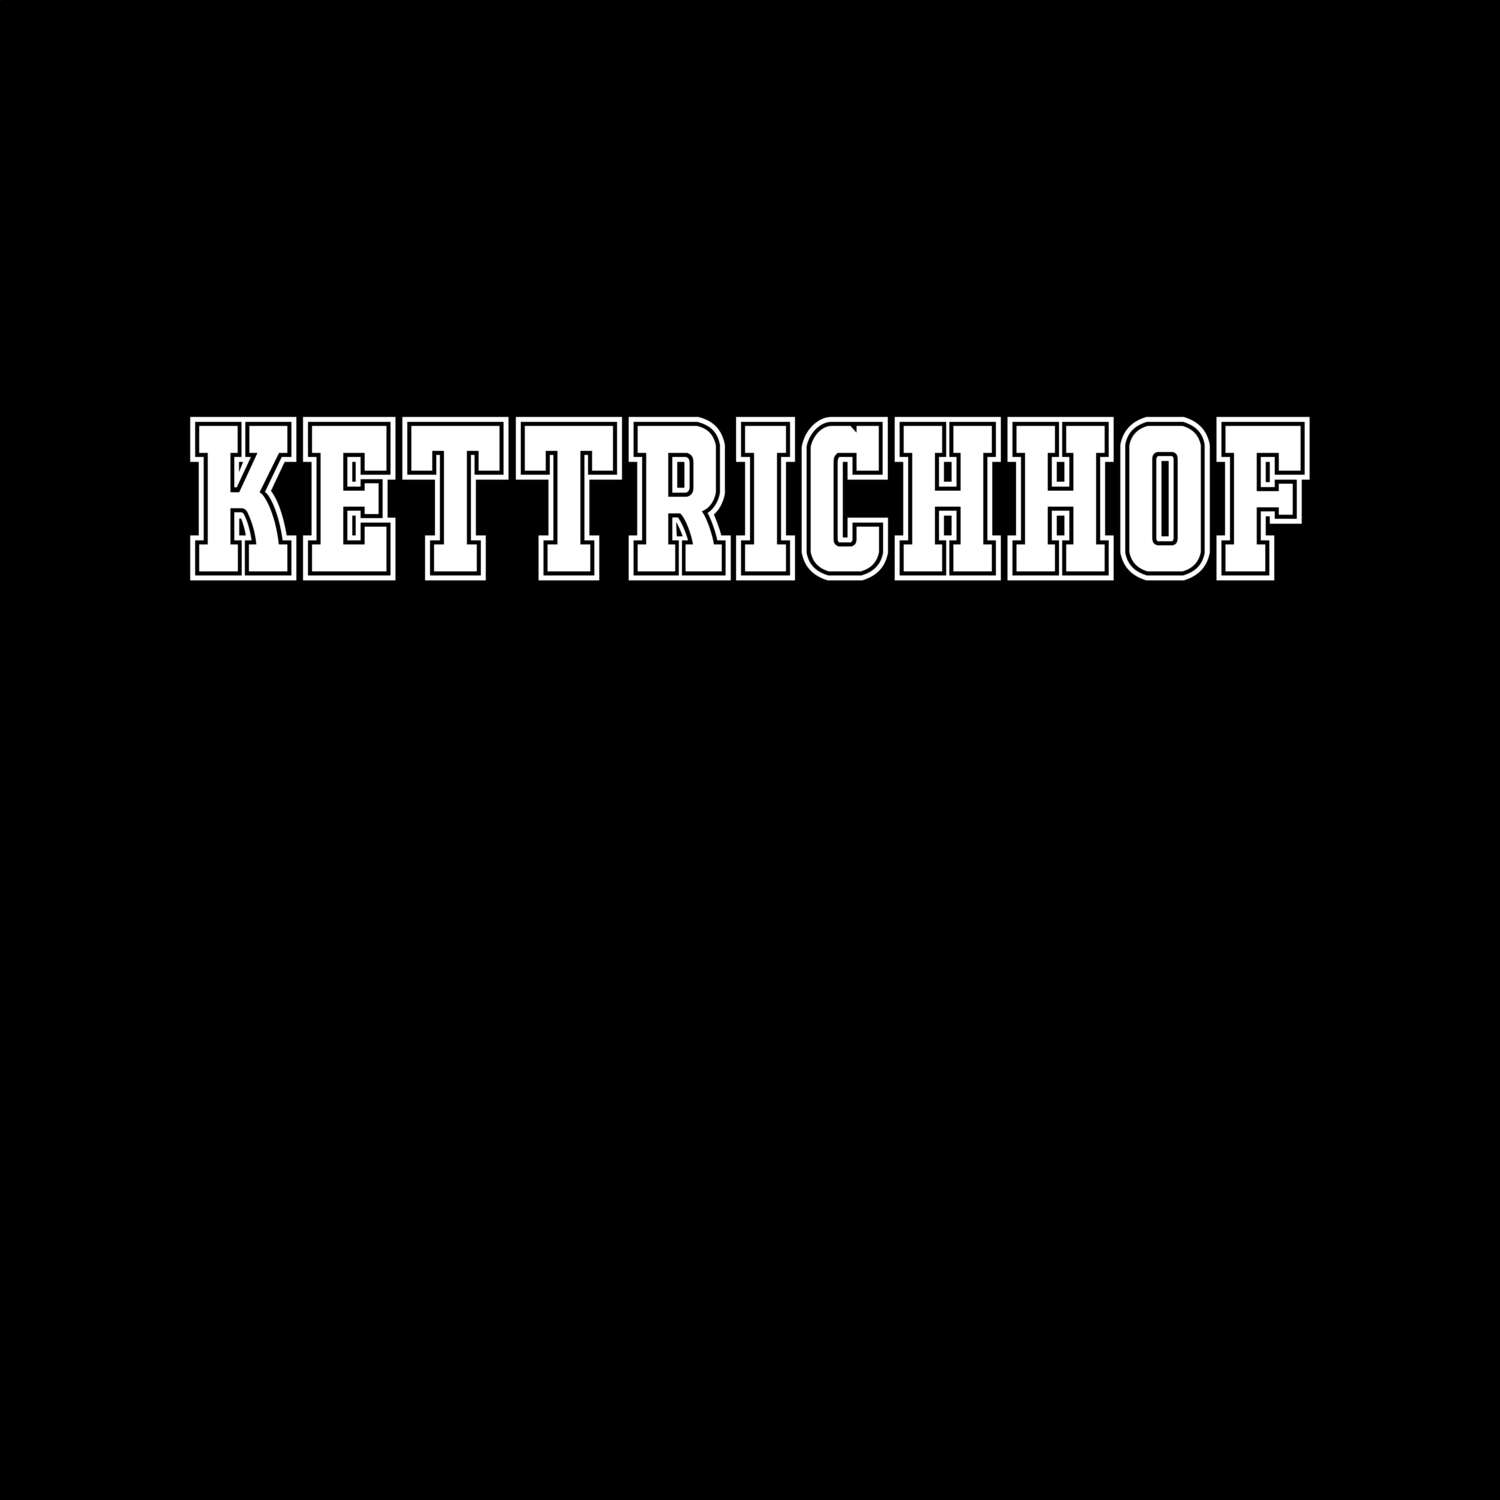 Kettrichhof T-Shirt »Classic«